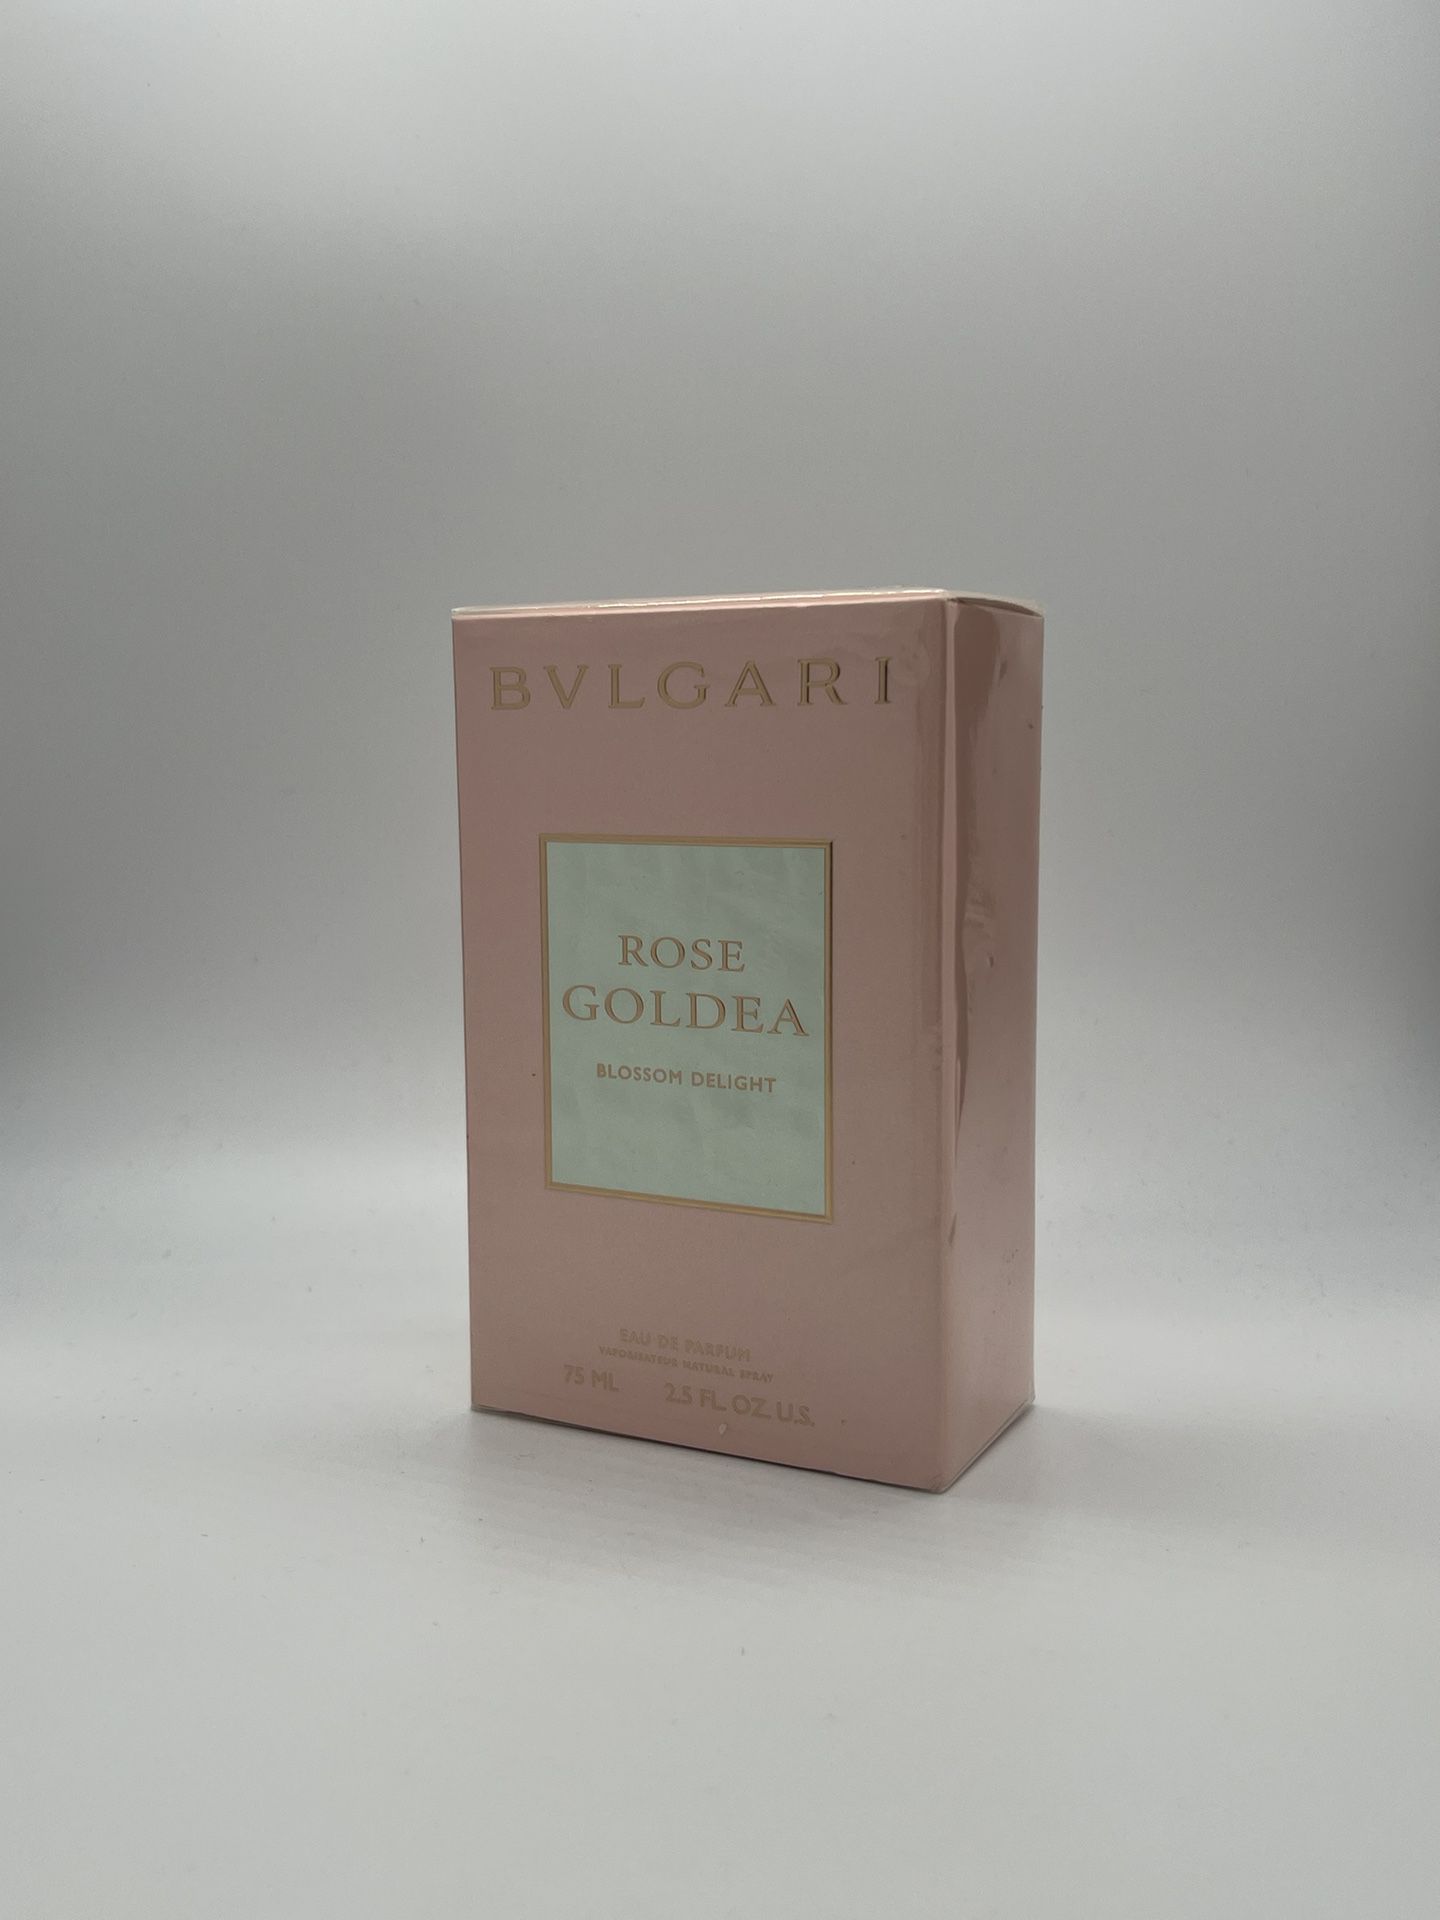 BVLGARI Rose Goldea Blossom Delight Eau de Parfum 2.5 oz (75 ml)